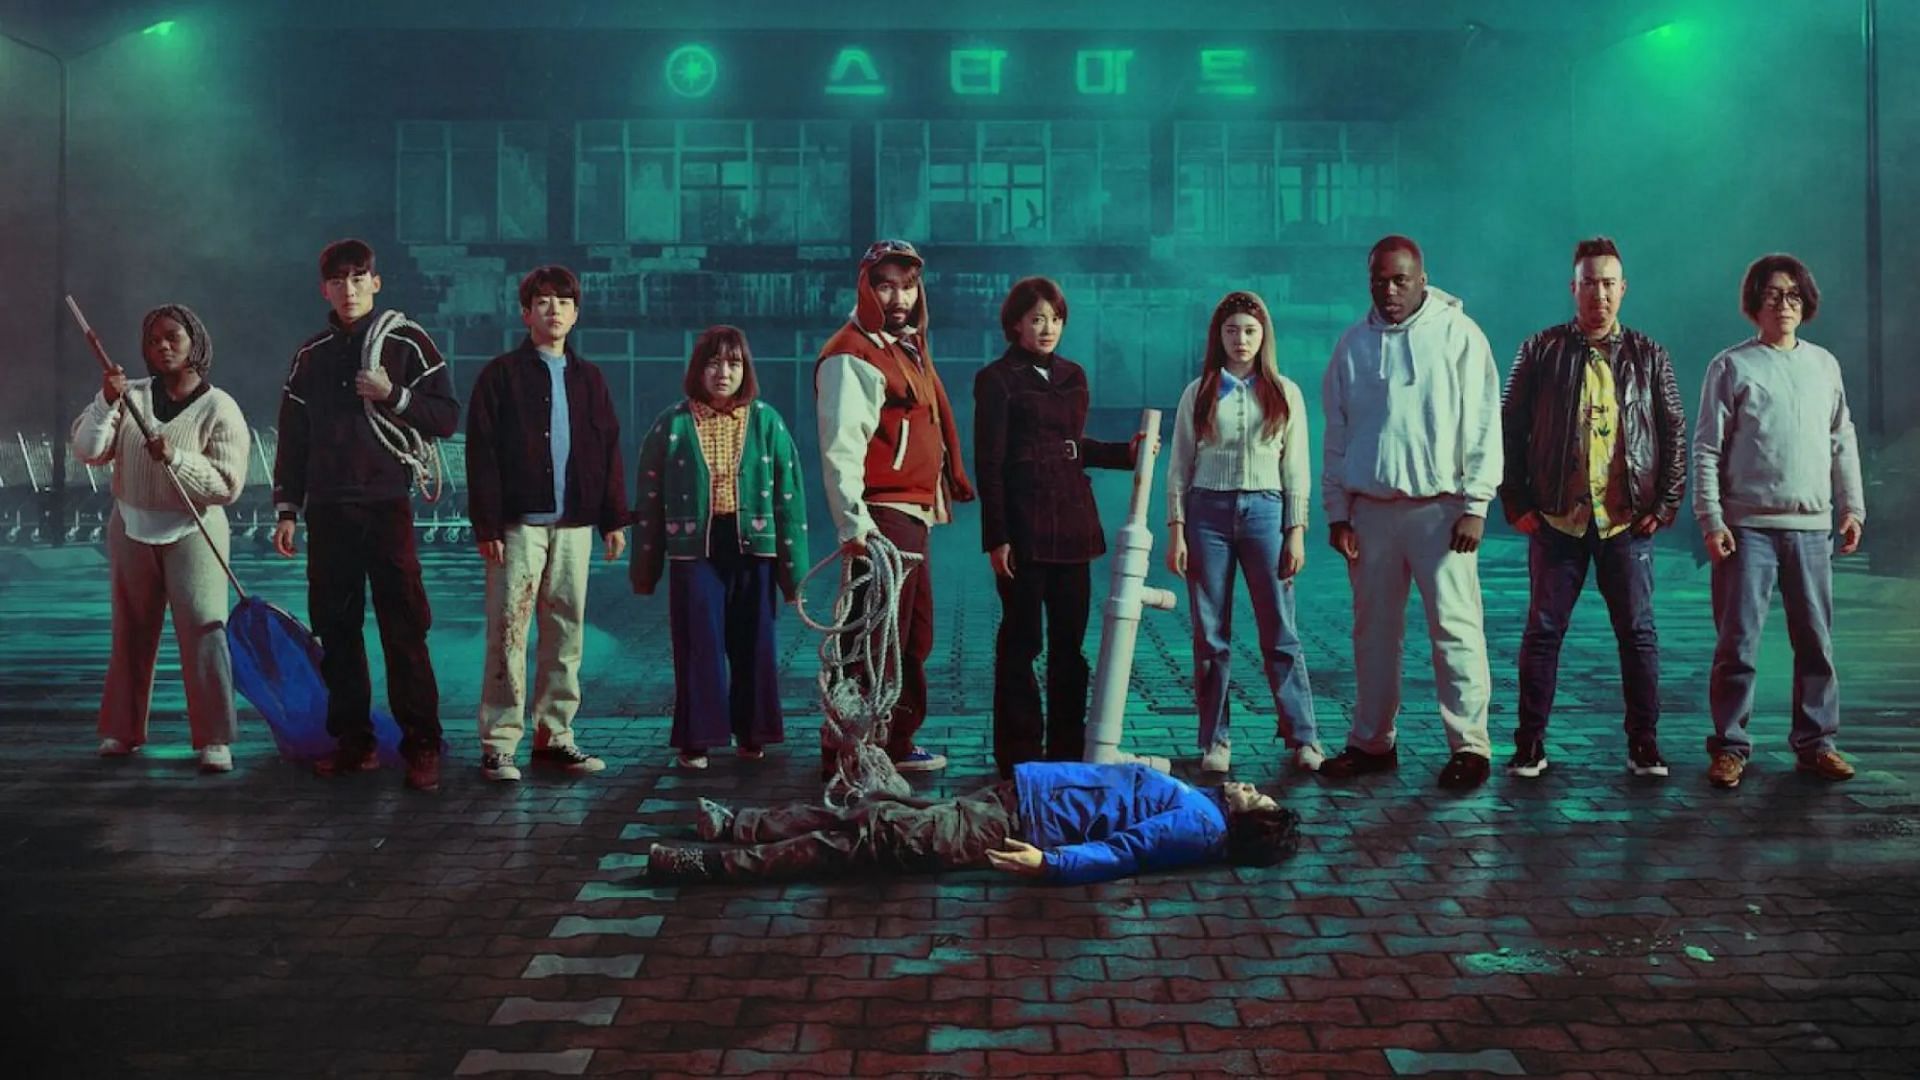 Zombieverse premiered on August 8 (Image via Netflix)